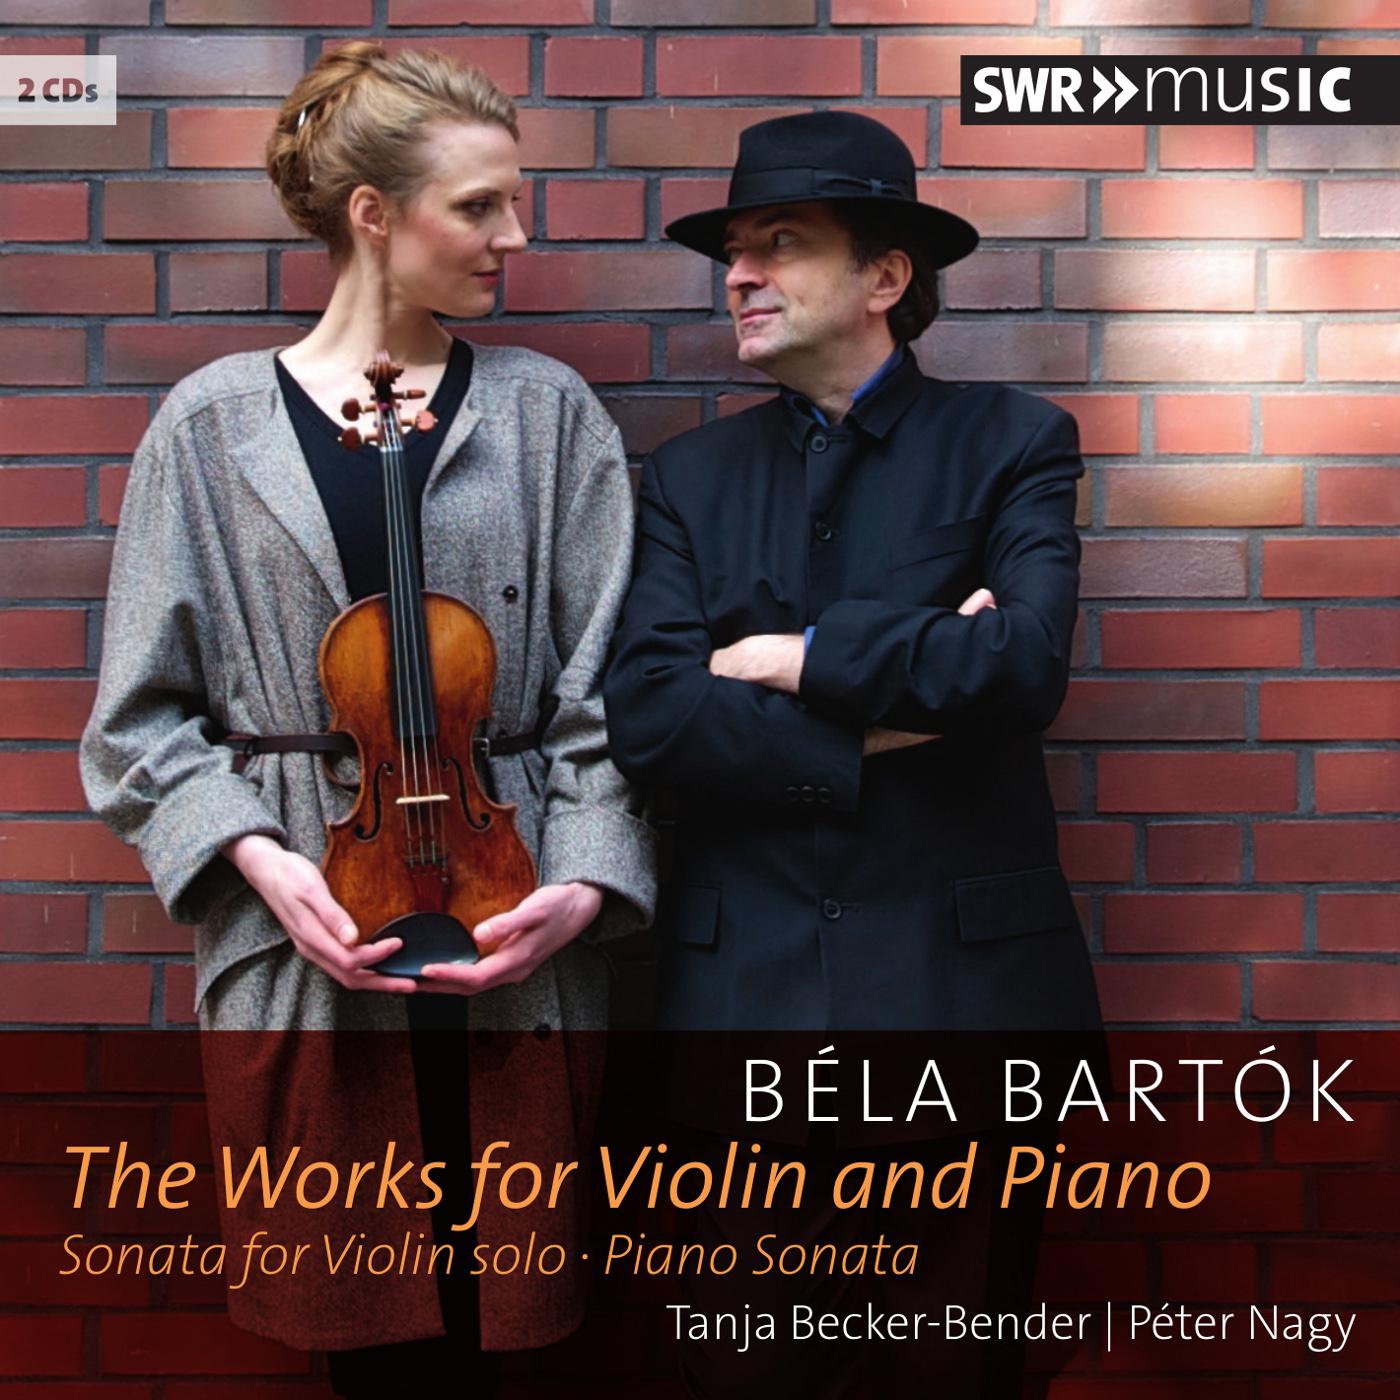 Tanja Becker-Bender - Violin Sonata in E Minor, BB 28:II. Andante